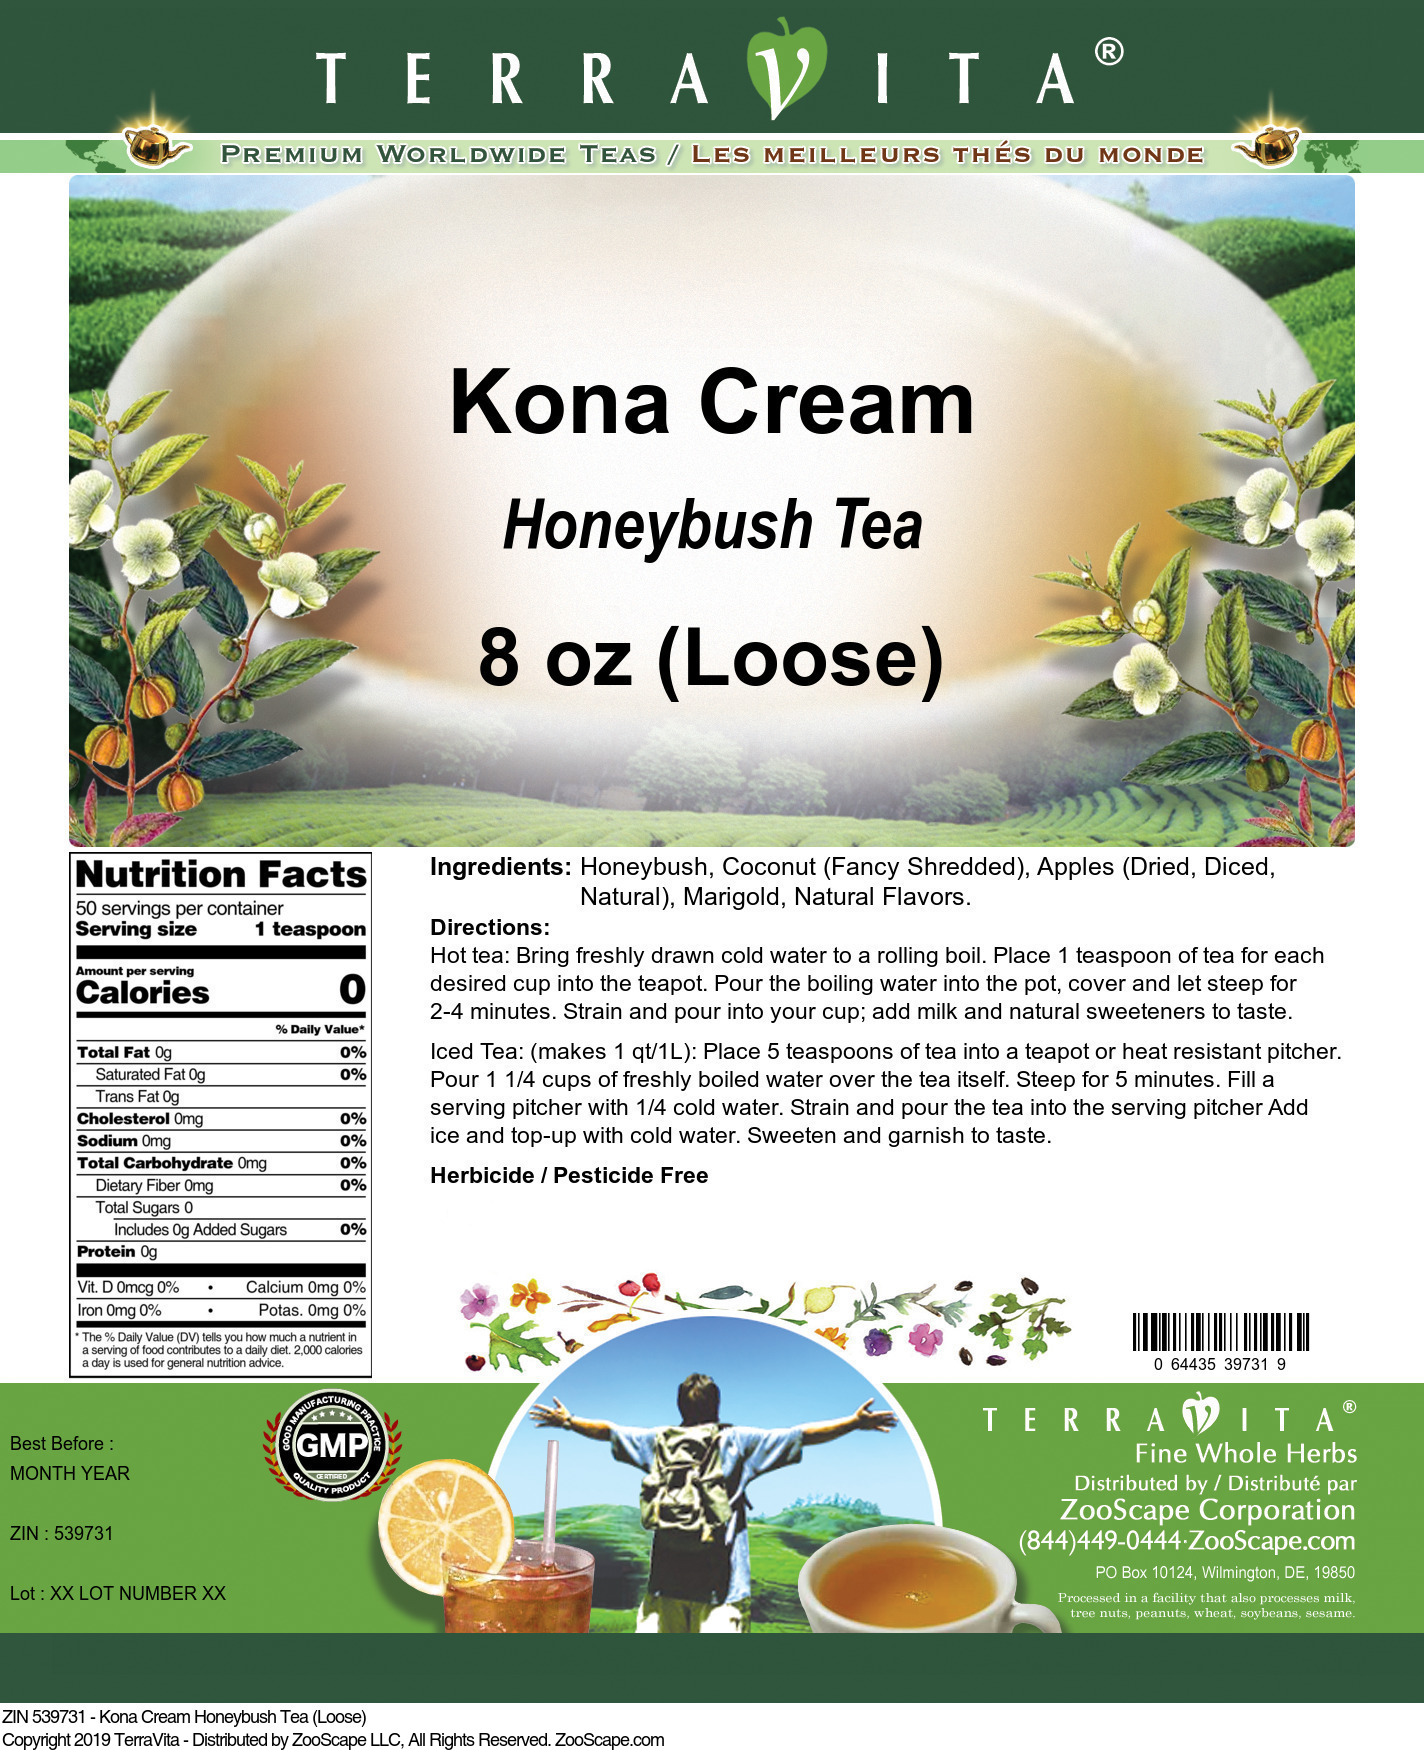 Kona Cream Honeybush Tea (Loose) - Label